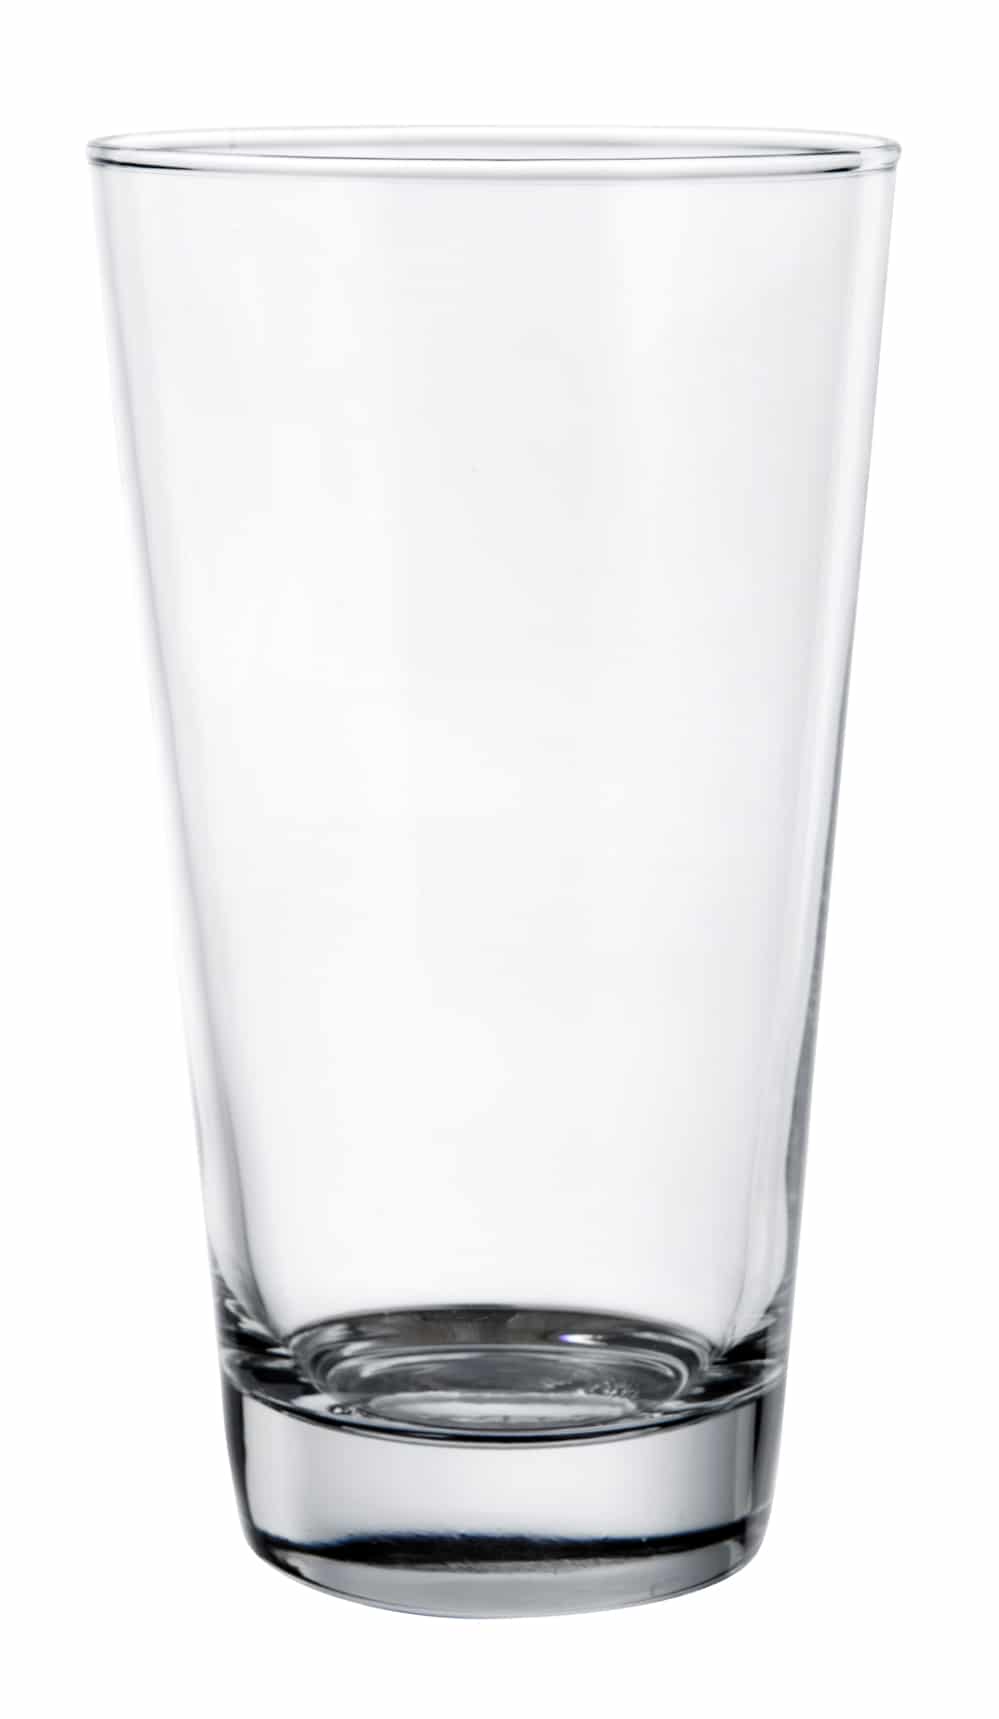 BELAGUA Cocktail Glass Tempered 47cl   T HOSTELVIA VICRILA SPAIN ®